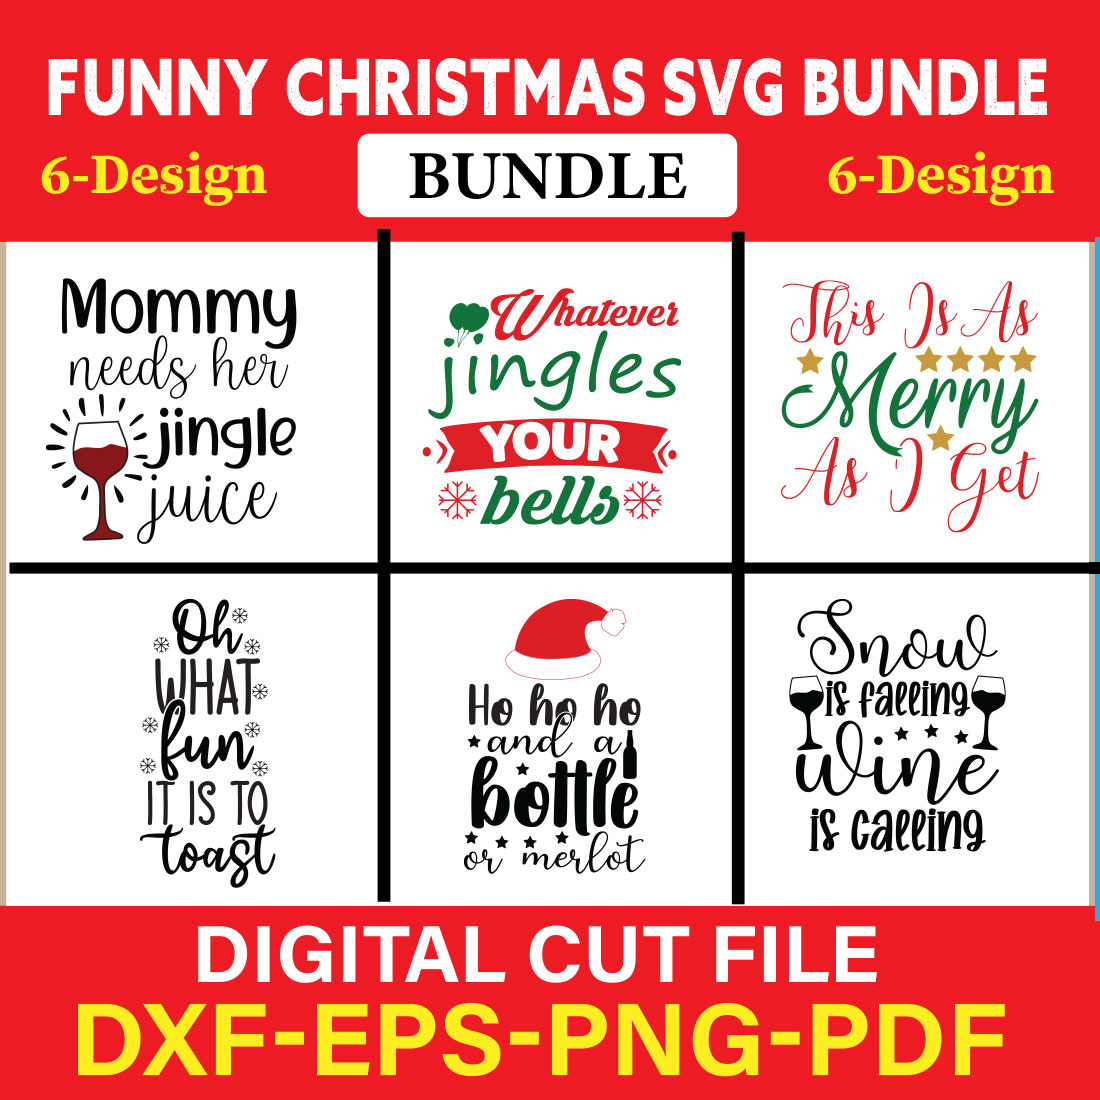 Christmas SVG Bundle / Funny Christmas SVG / Cut File Vol-04 cover image.